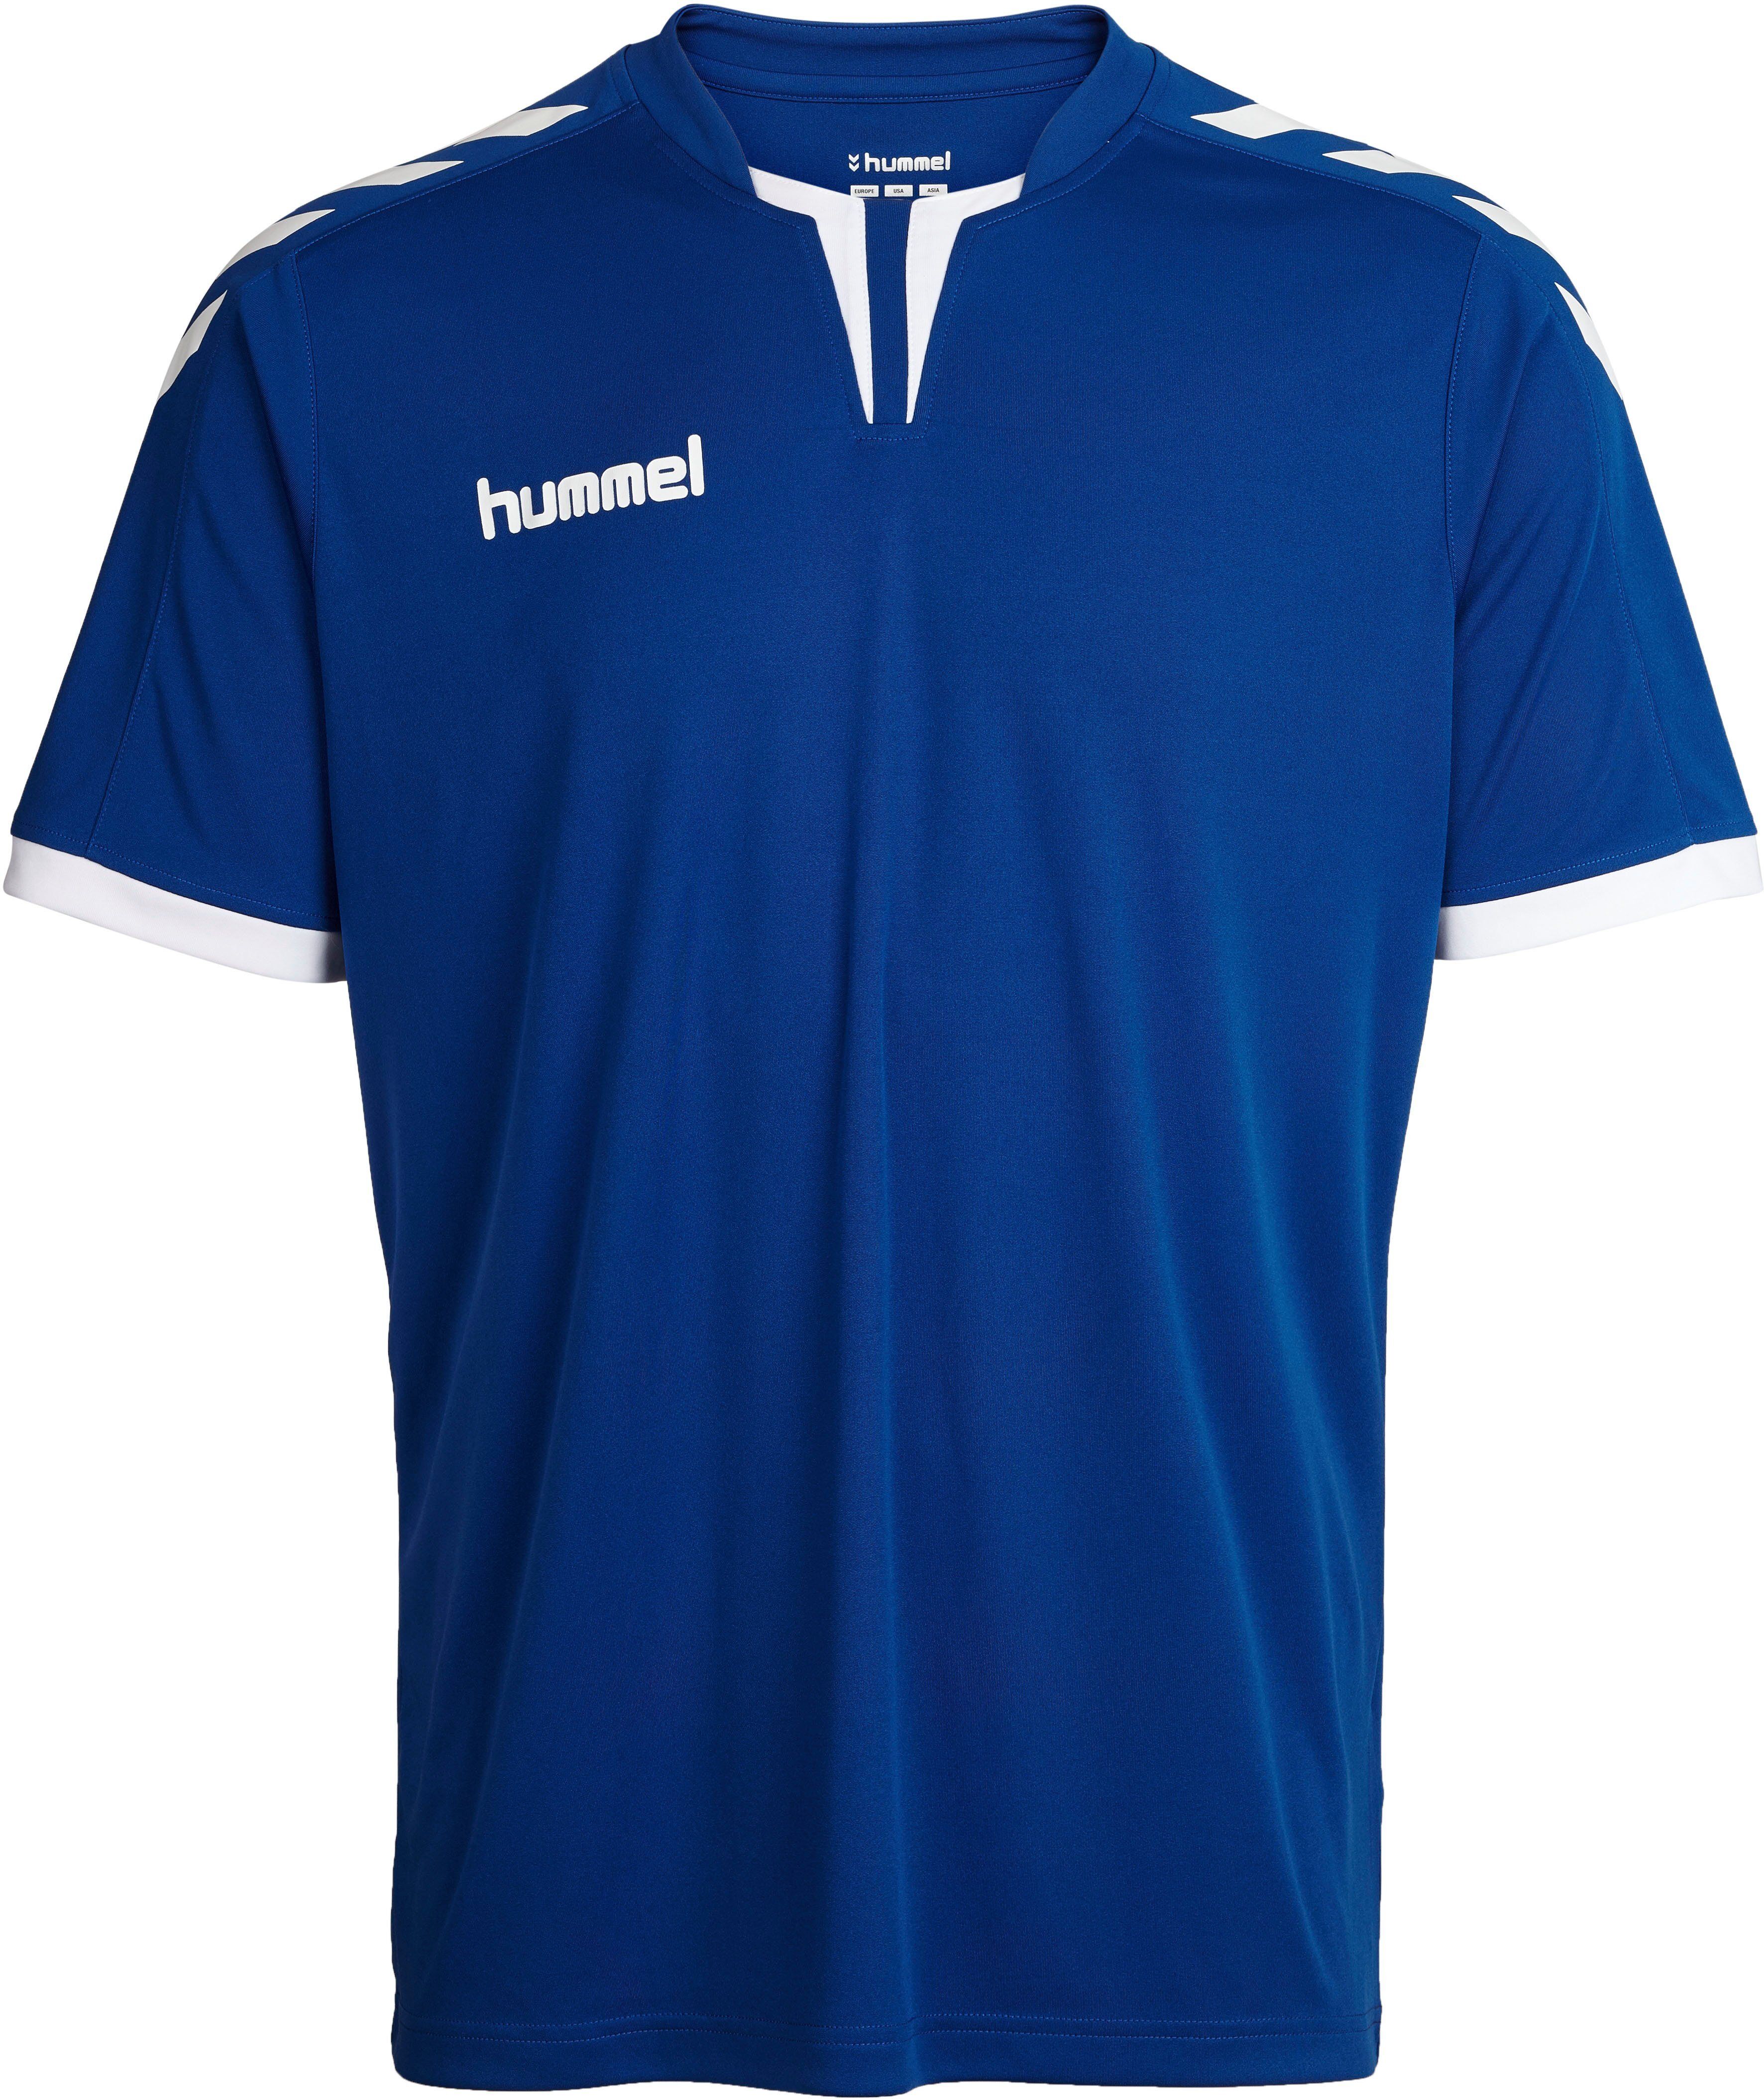 hummel Trainingsshirt »CORE SHORTSLEEVE POLY JERSEY«, blau